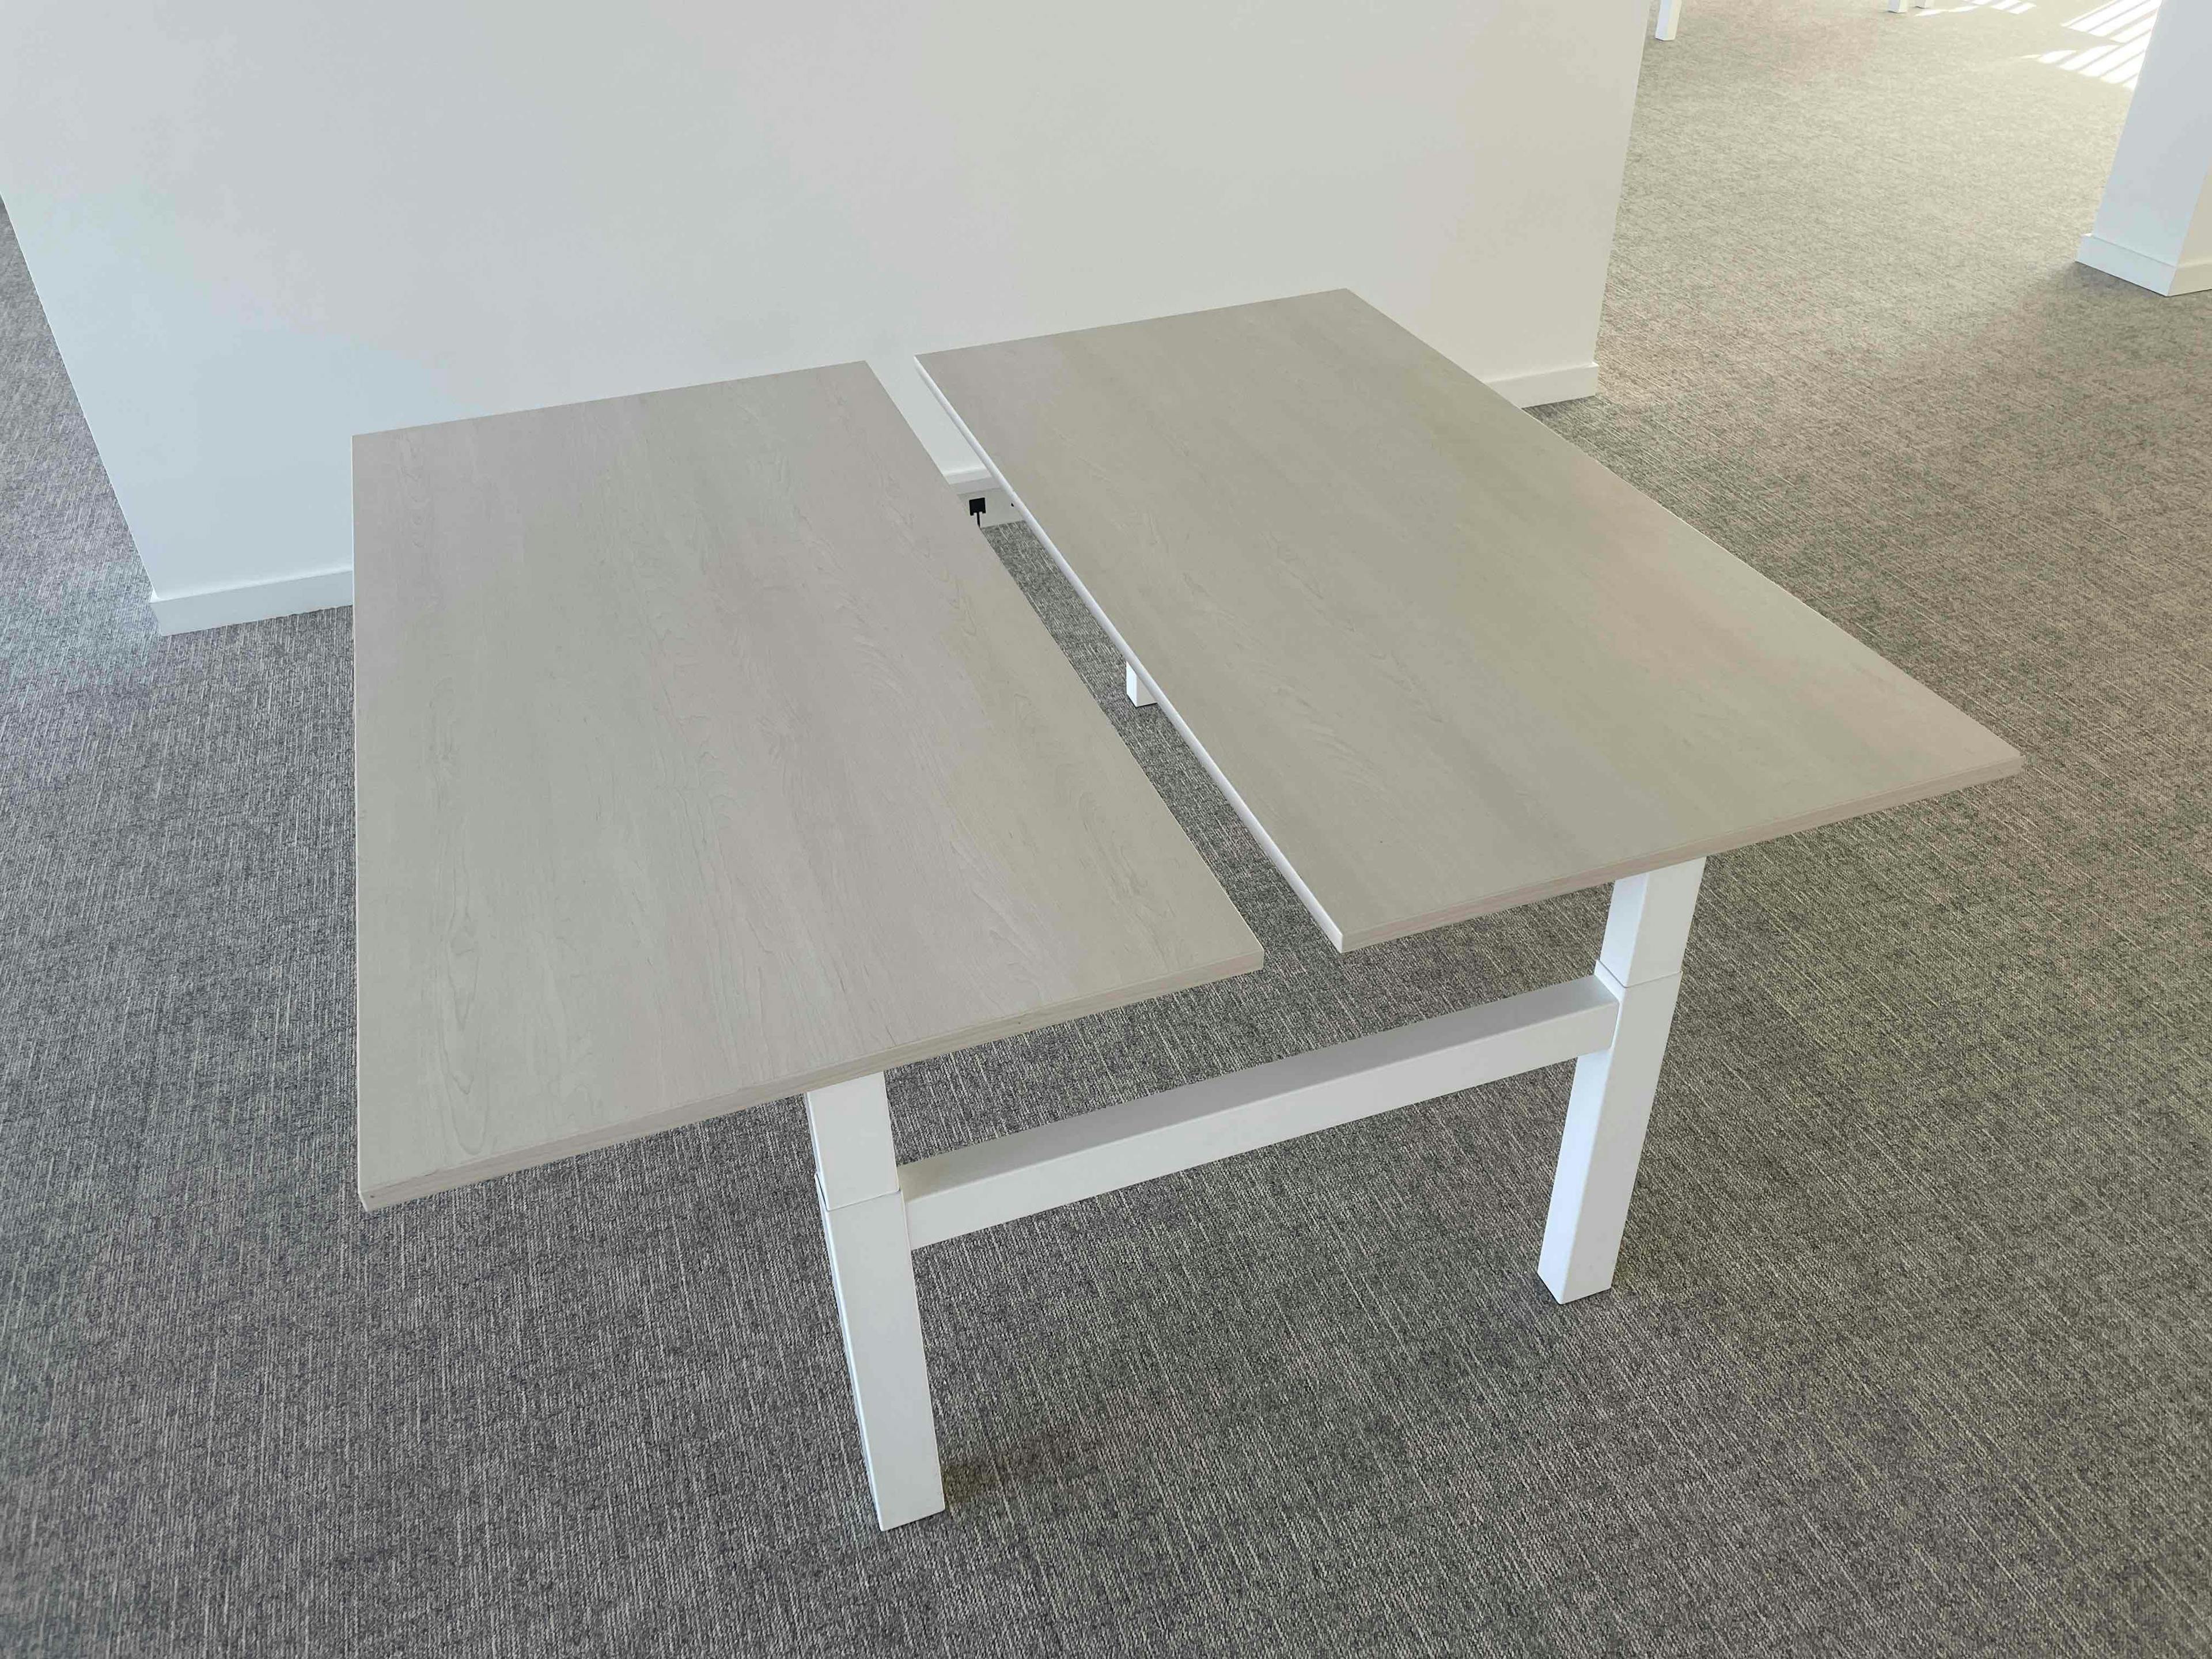 PREMIUM Bureau Duo - 160cm (MARKANT) - Second hand quality "Desks" - Relieve Furniture - 1